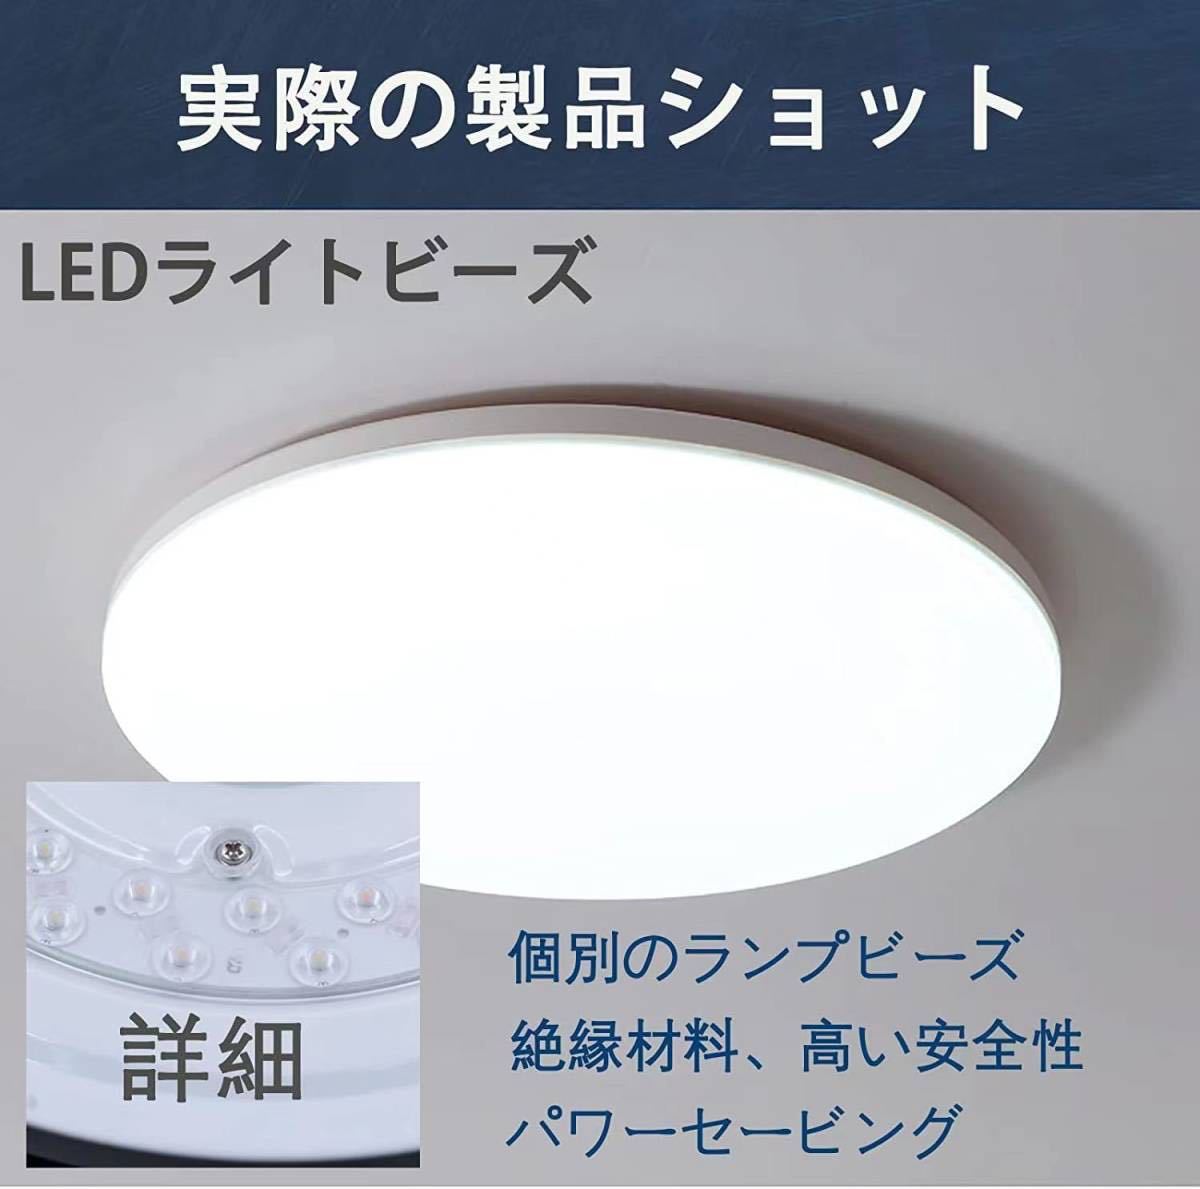 LEDシーリングライト6-8畳 最大電力 約28W 無段階調光調色 電球色 昼白色 3080lm 長夜灯 節電リモコン付き 材質アルミニウム4個セット専用_画像3